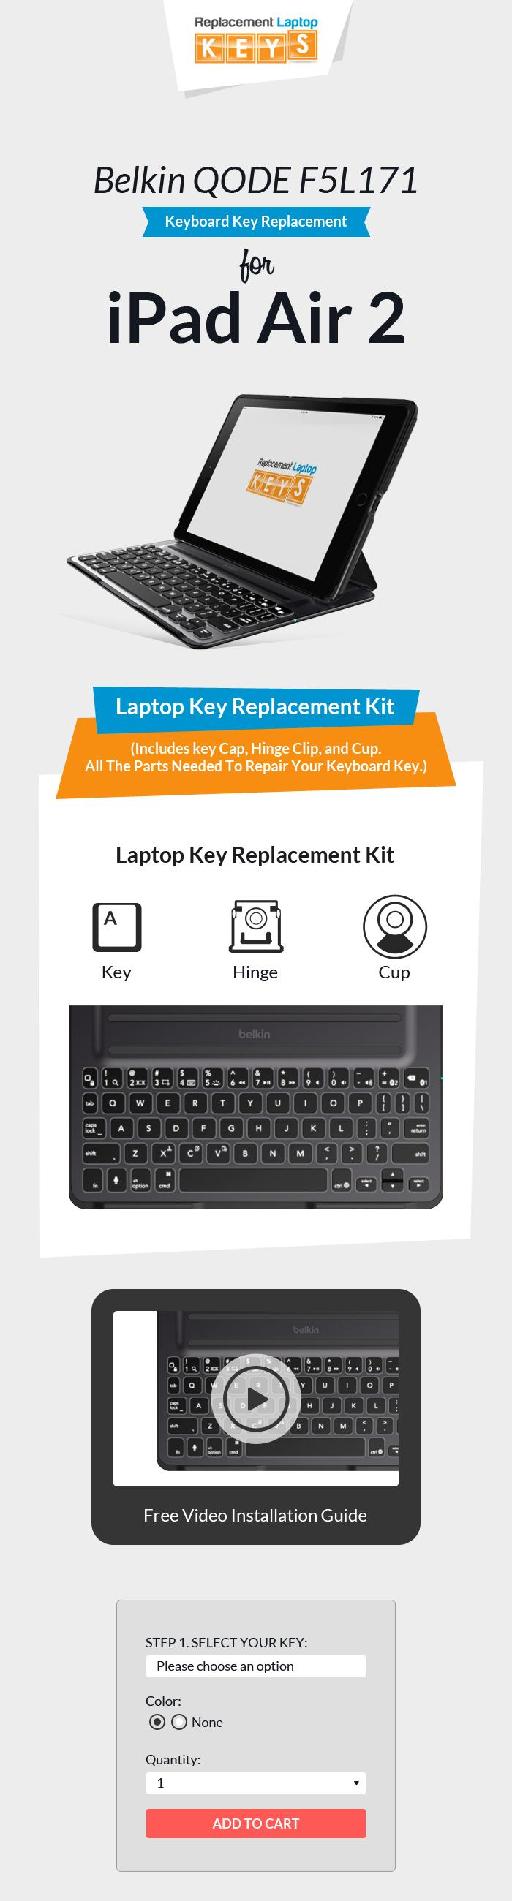 Belkin QODE F5L171 Keyboard Key Replacement for iPad Air 2